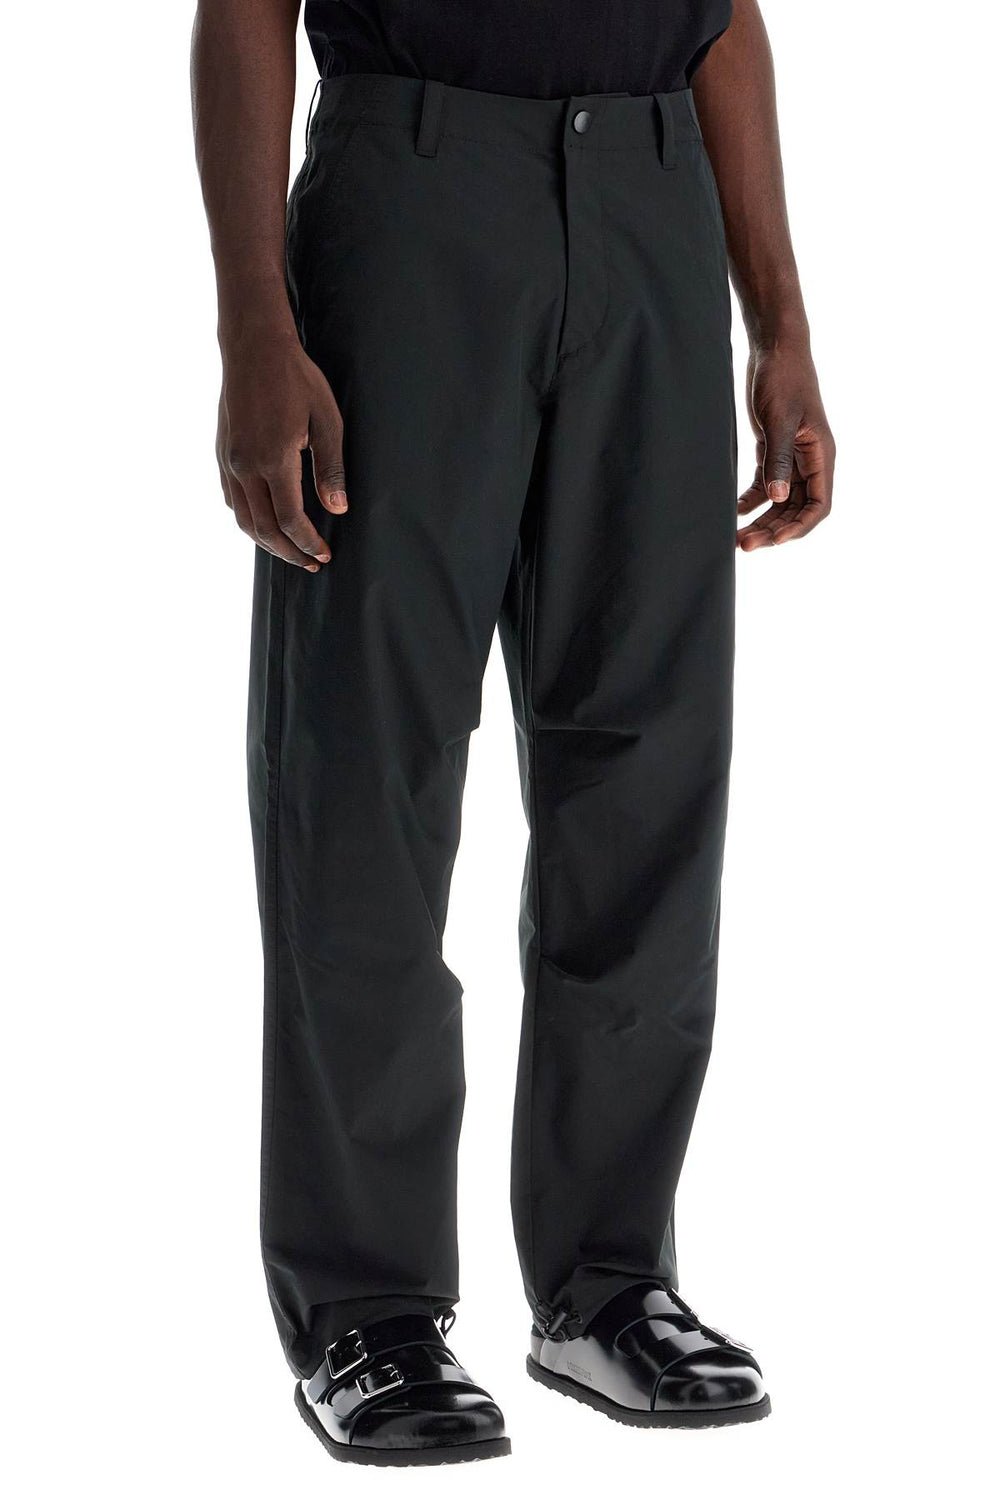 mashi technical fabric pants-1